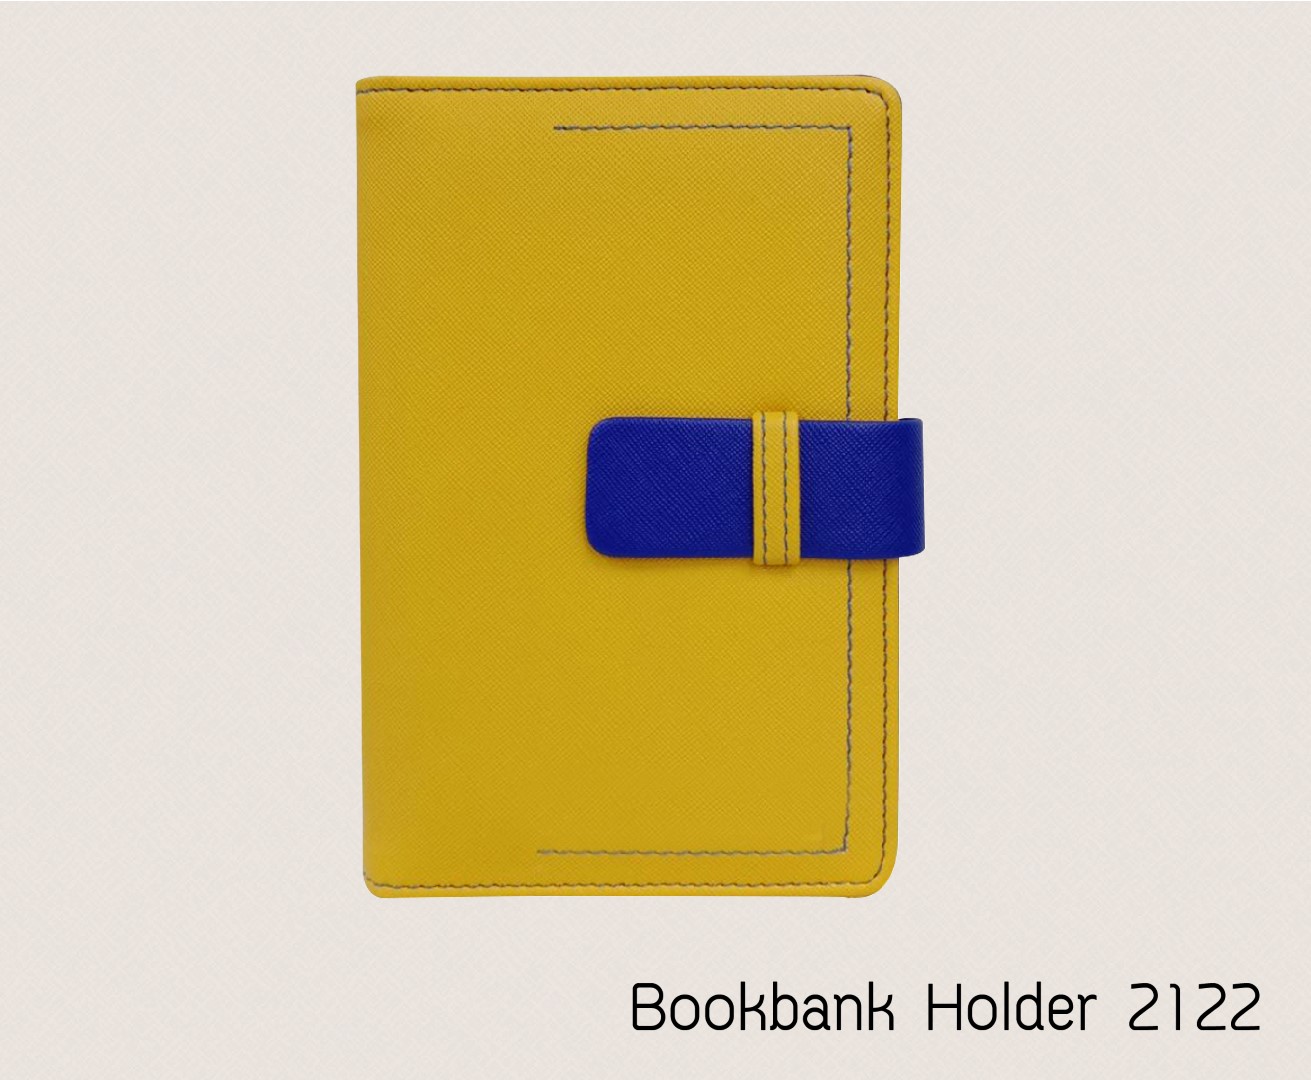 Bookbank holder 2122